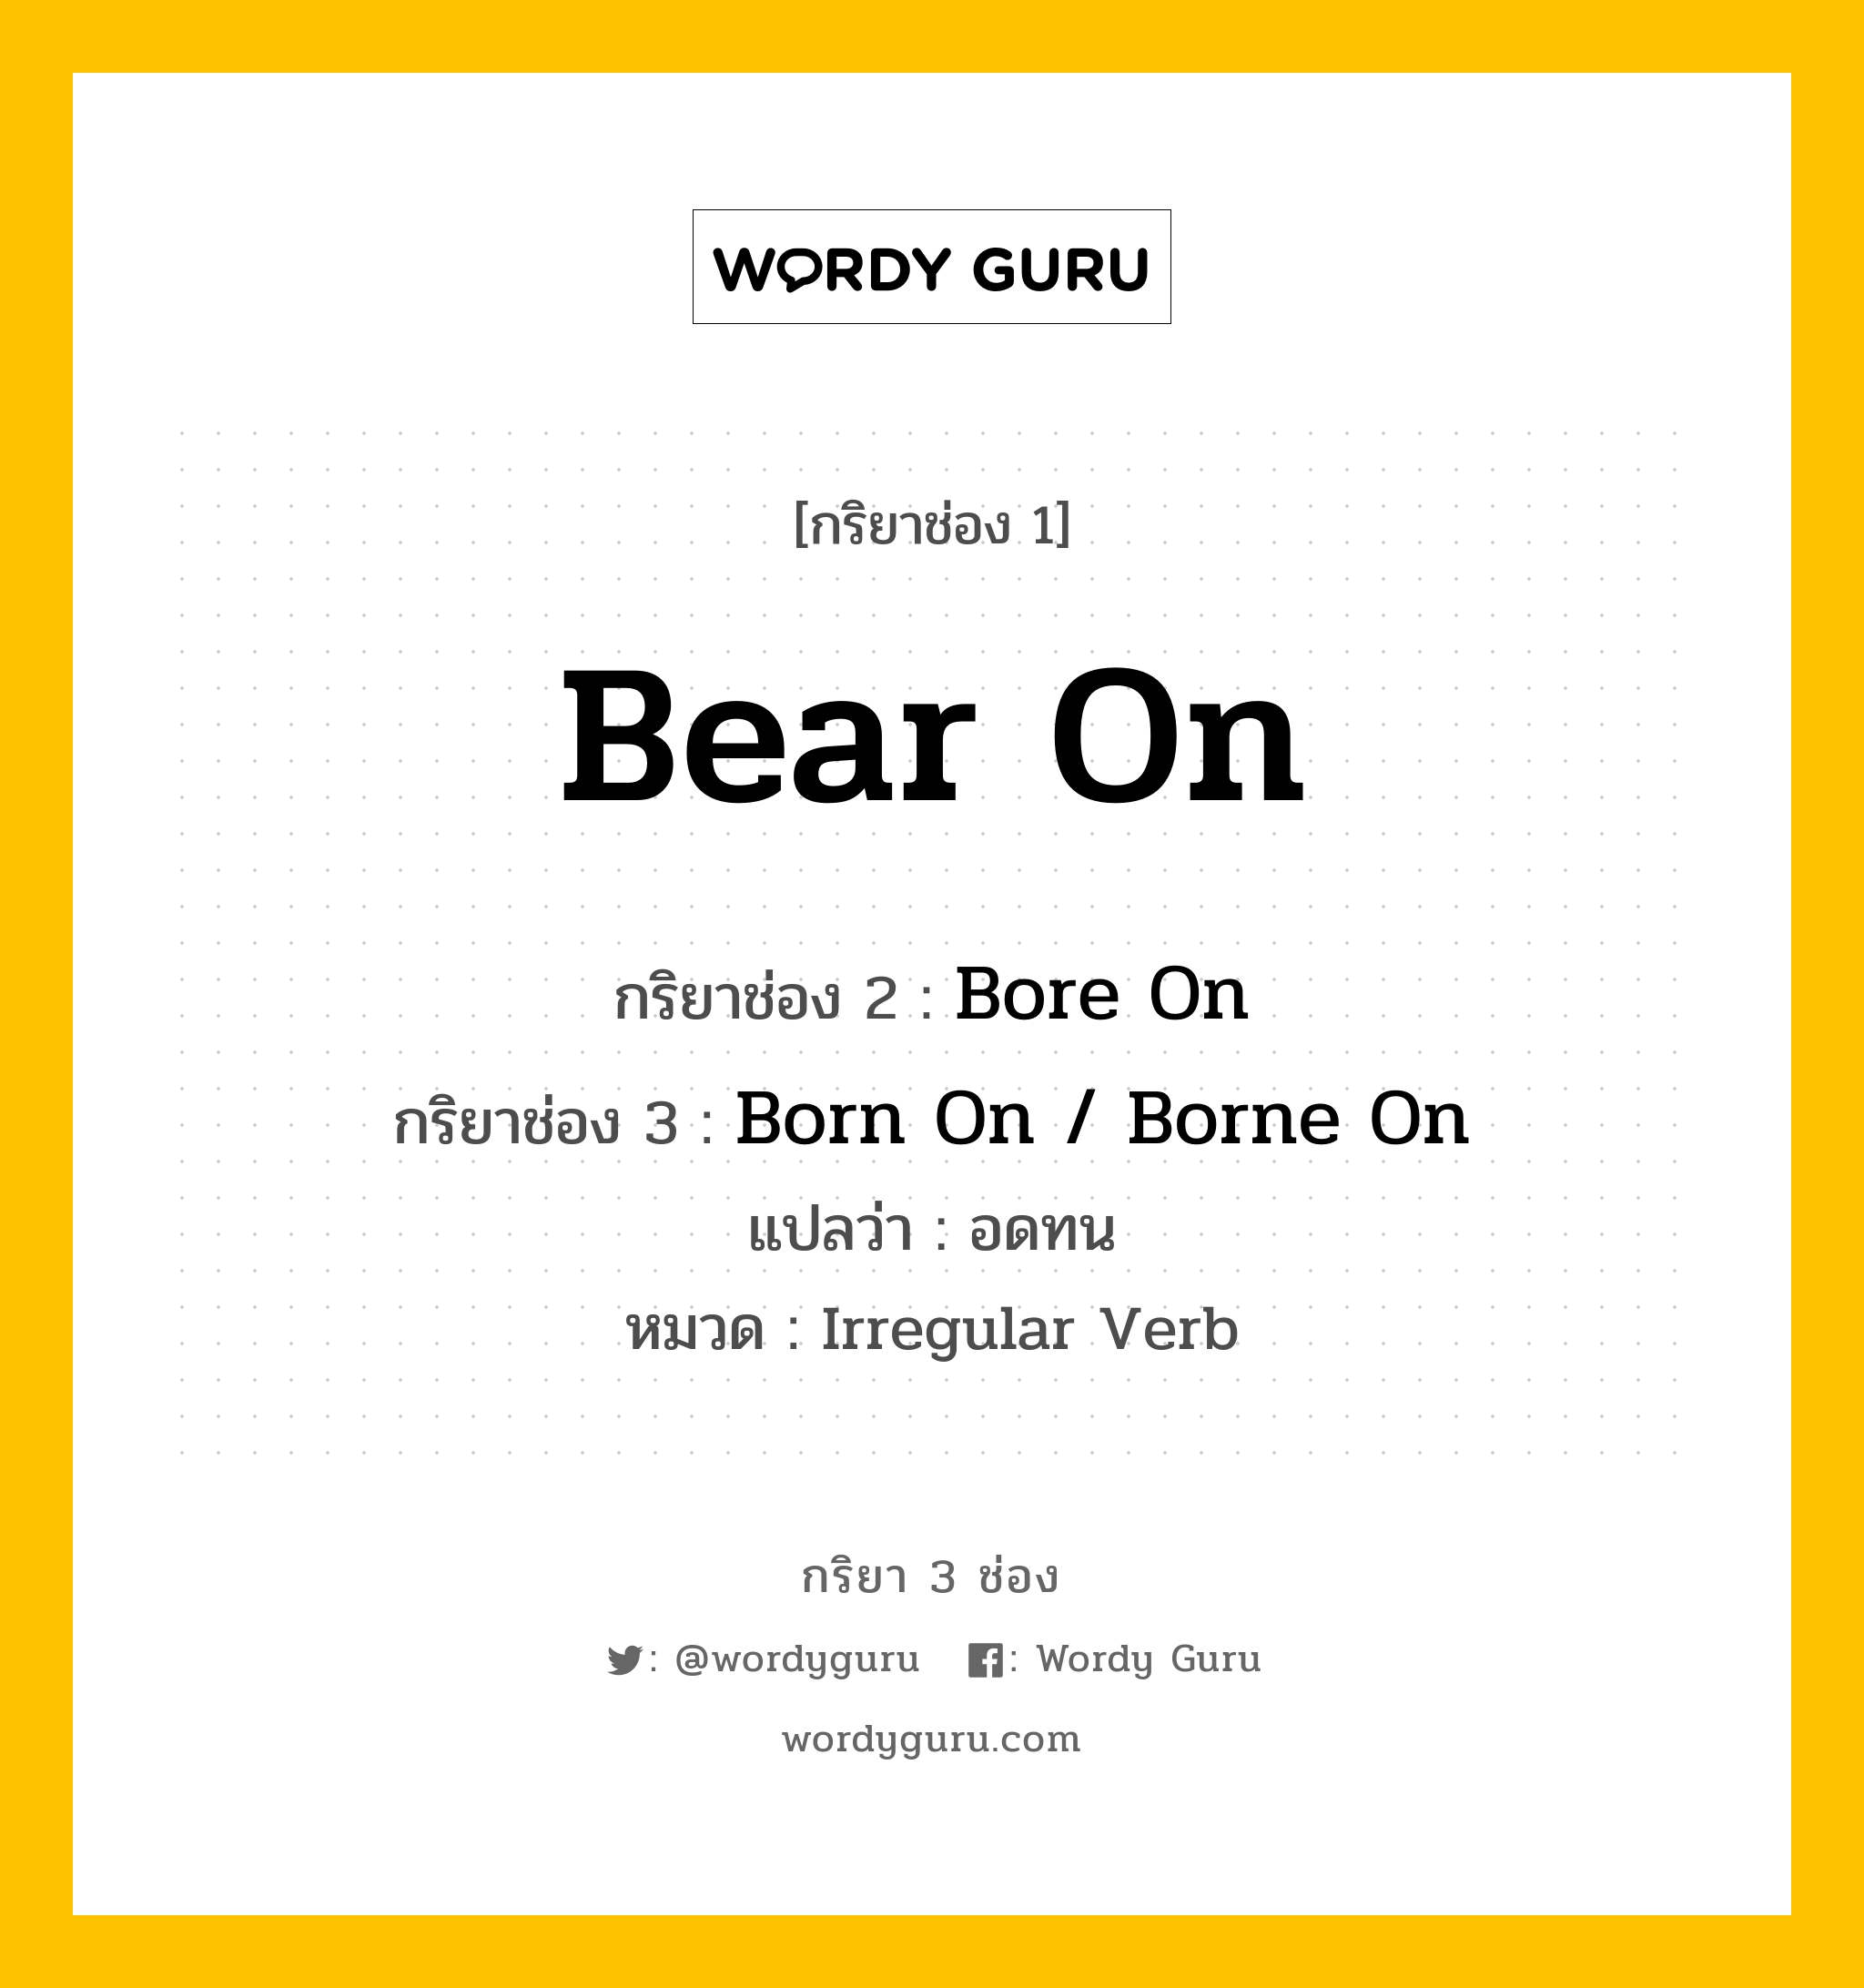 Bear On มีกริยา 3 ช่องอะไรบ้าง? คำศัพท์ในกลุ่มประเภท Irregular Verb, กริยาช่อง 1 Bear On กริยาช่อง 2 Bore On กริยาช่อง 3 Born On / Borne On แปลว่า อดทน หมวด Irregular Verb หมวด Irregular Verb